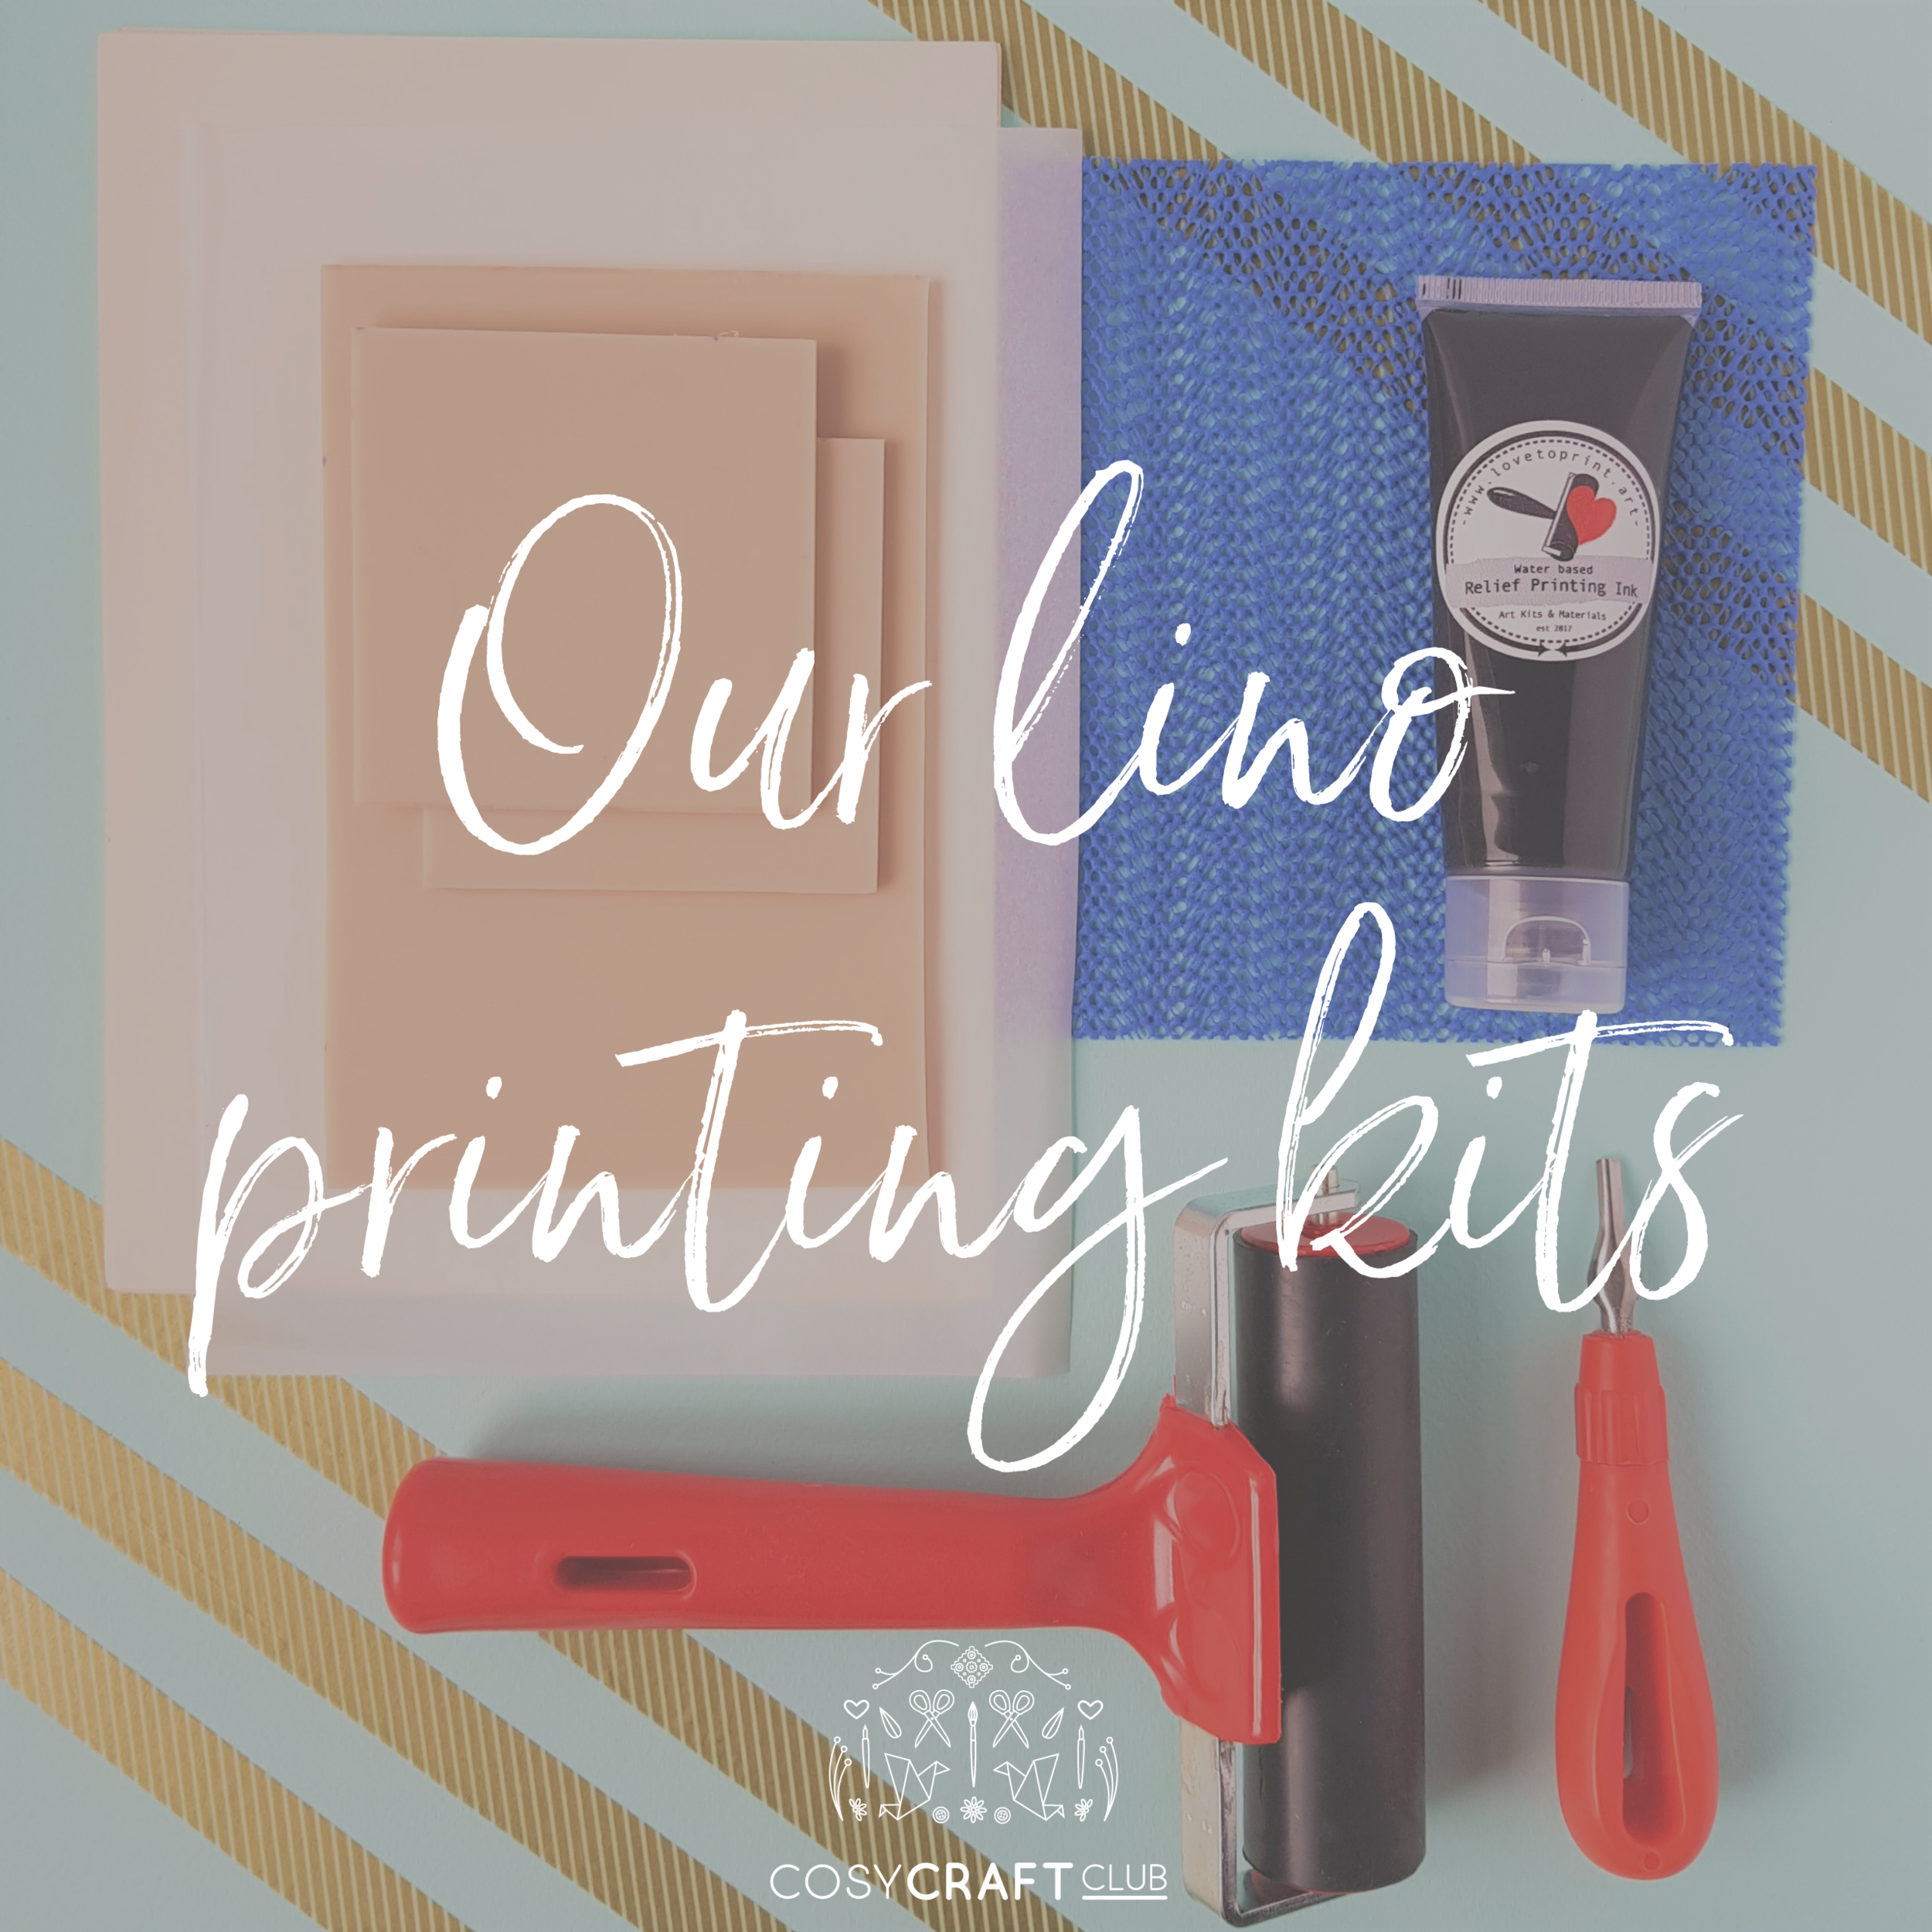 Lino Print Kit, Art Supplies